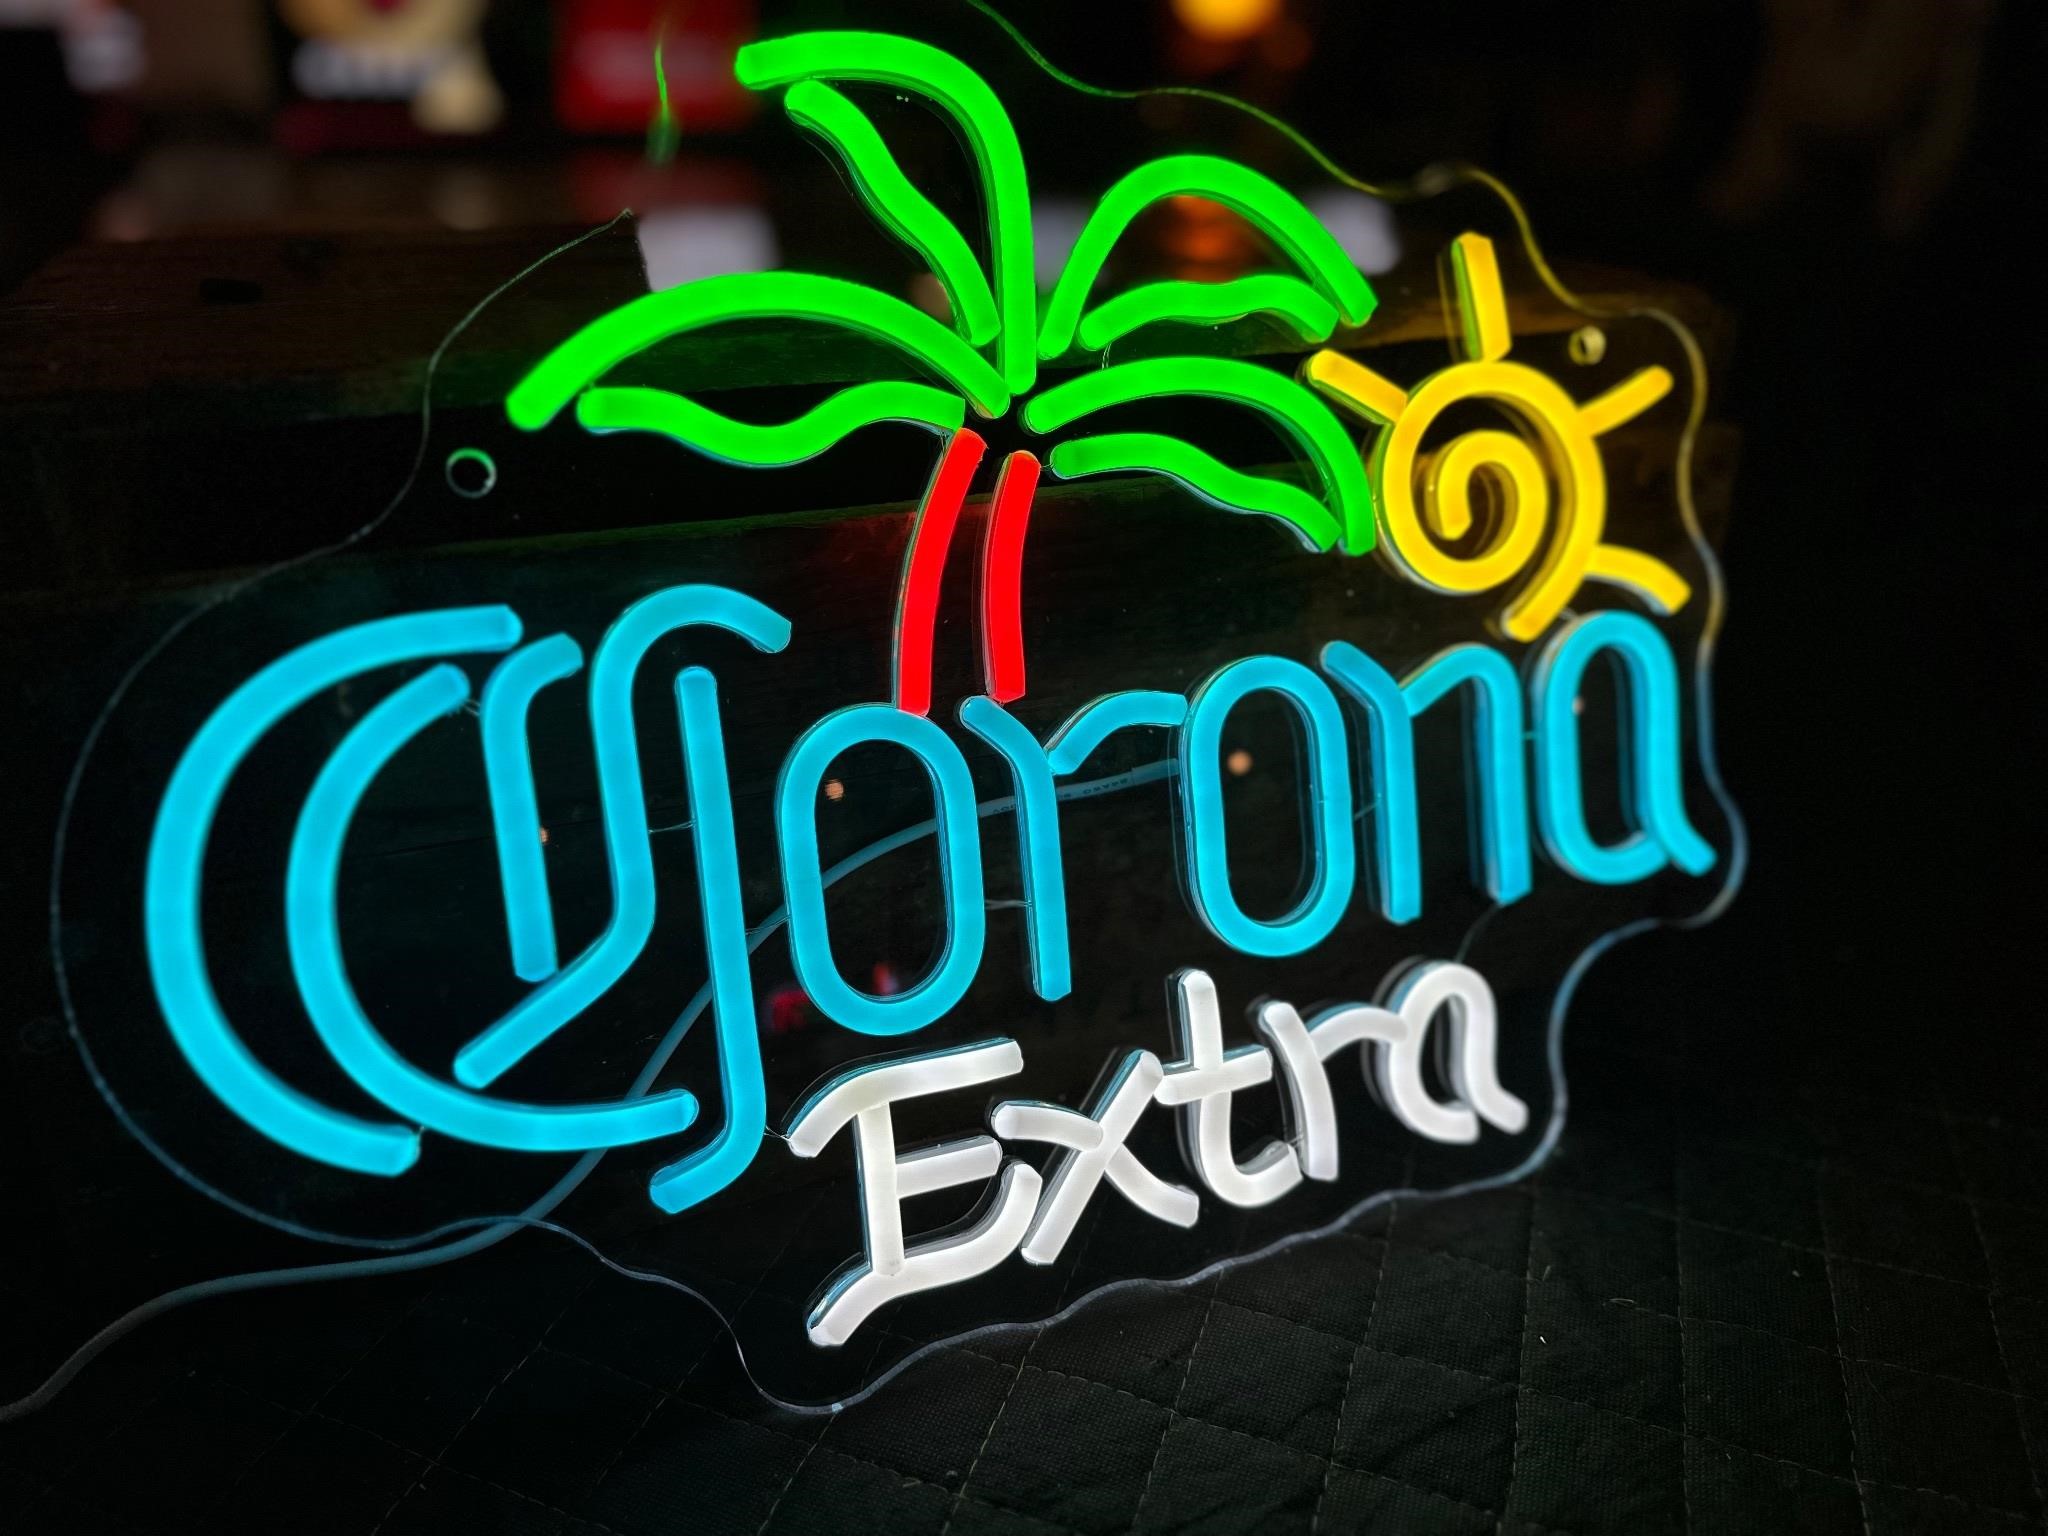 16 x 13” LED Corona Extra